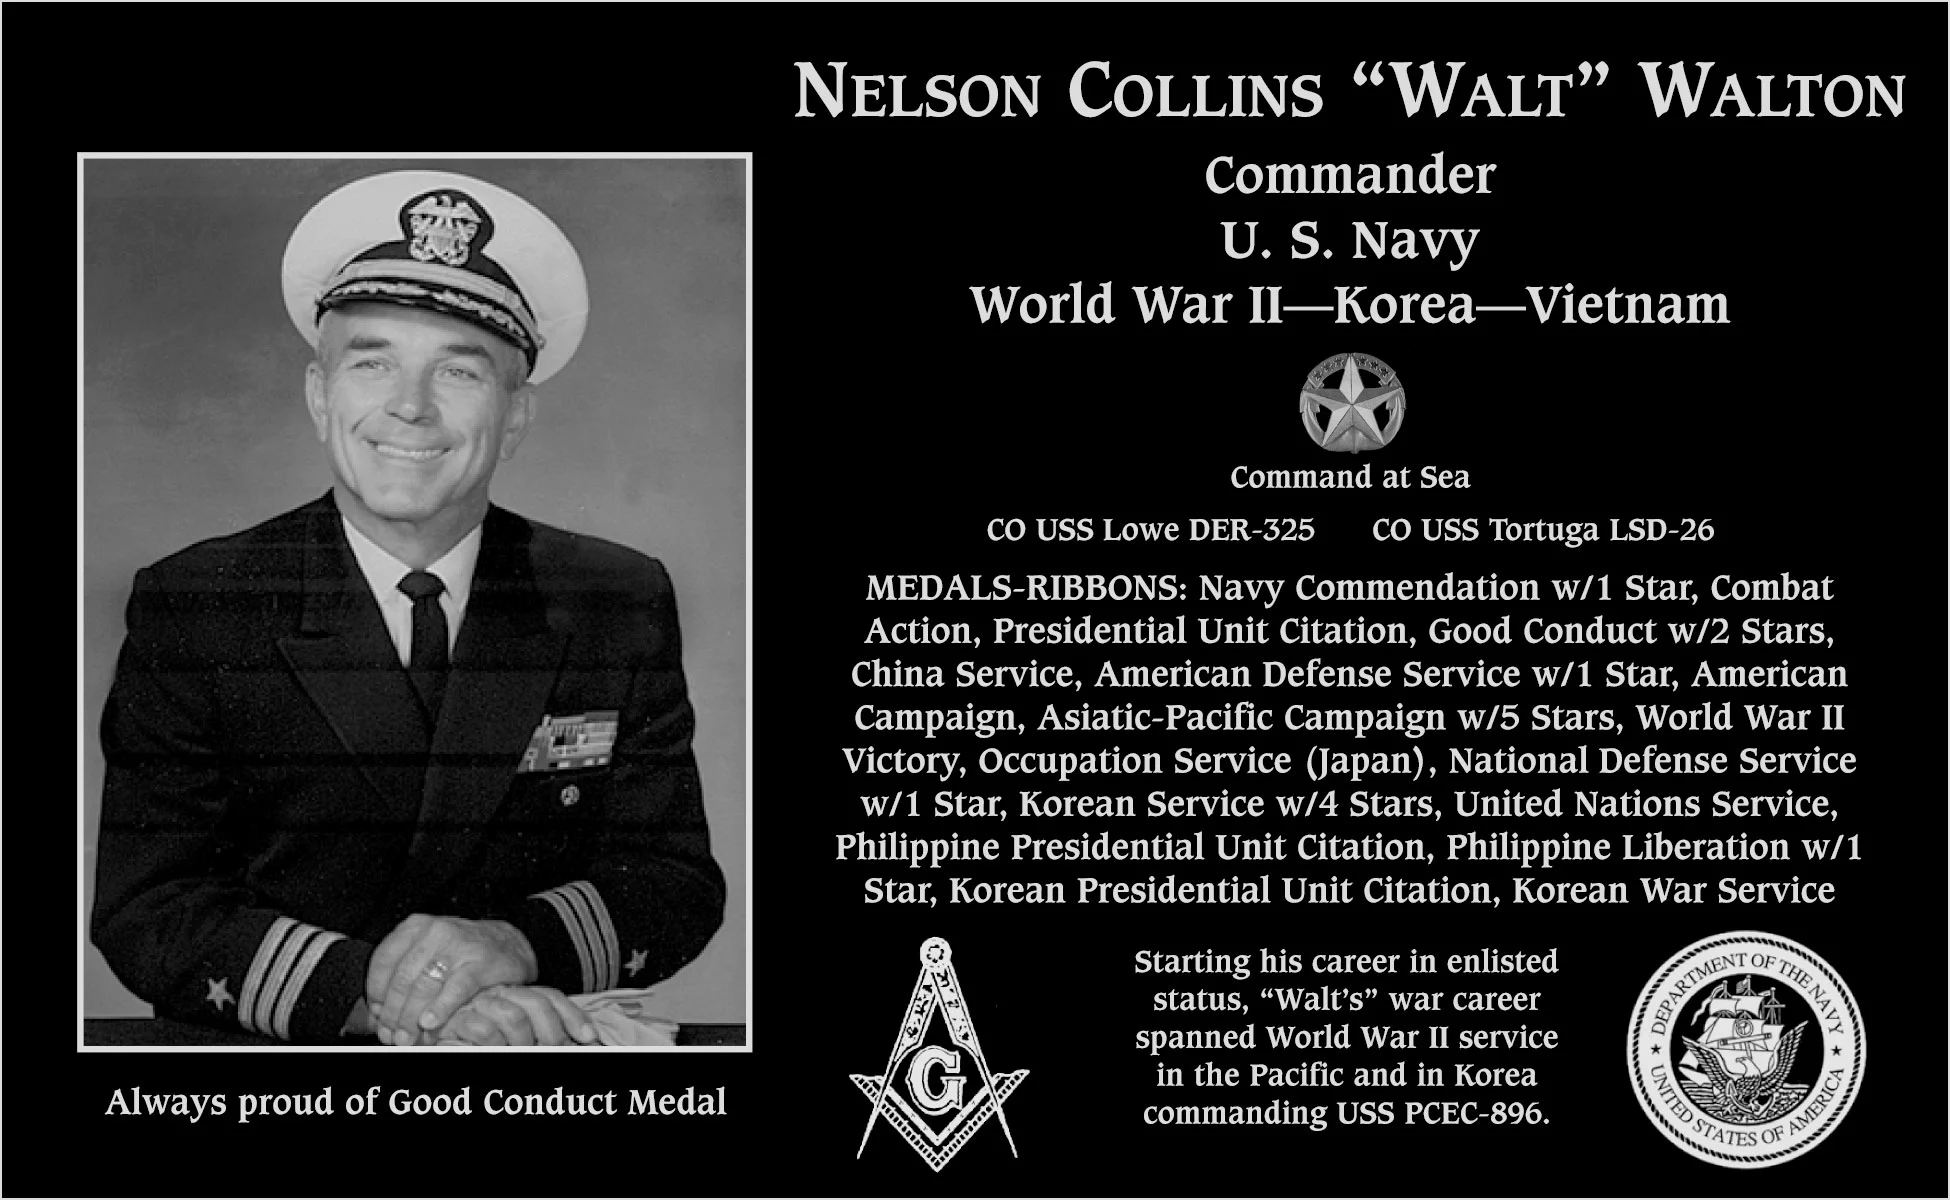 Nelson Collins “Walt” Walton